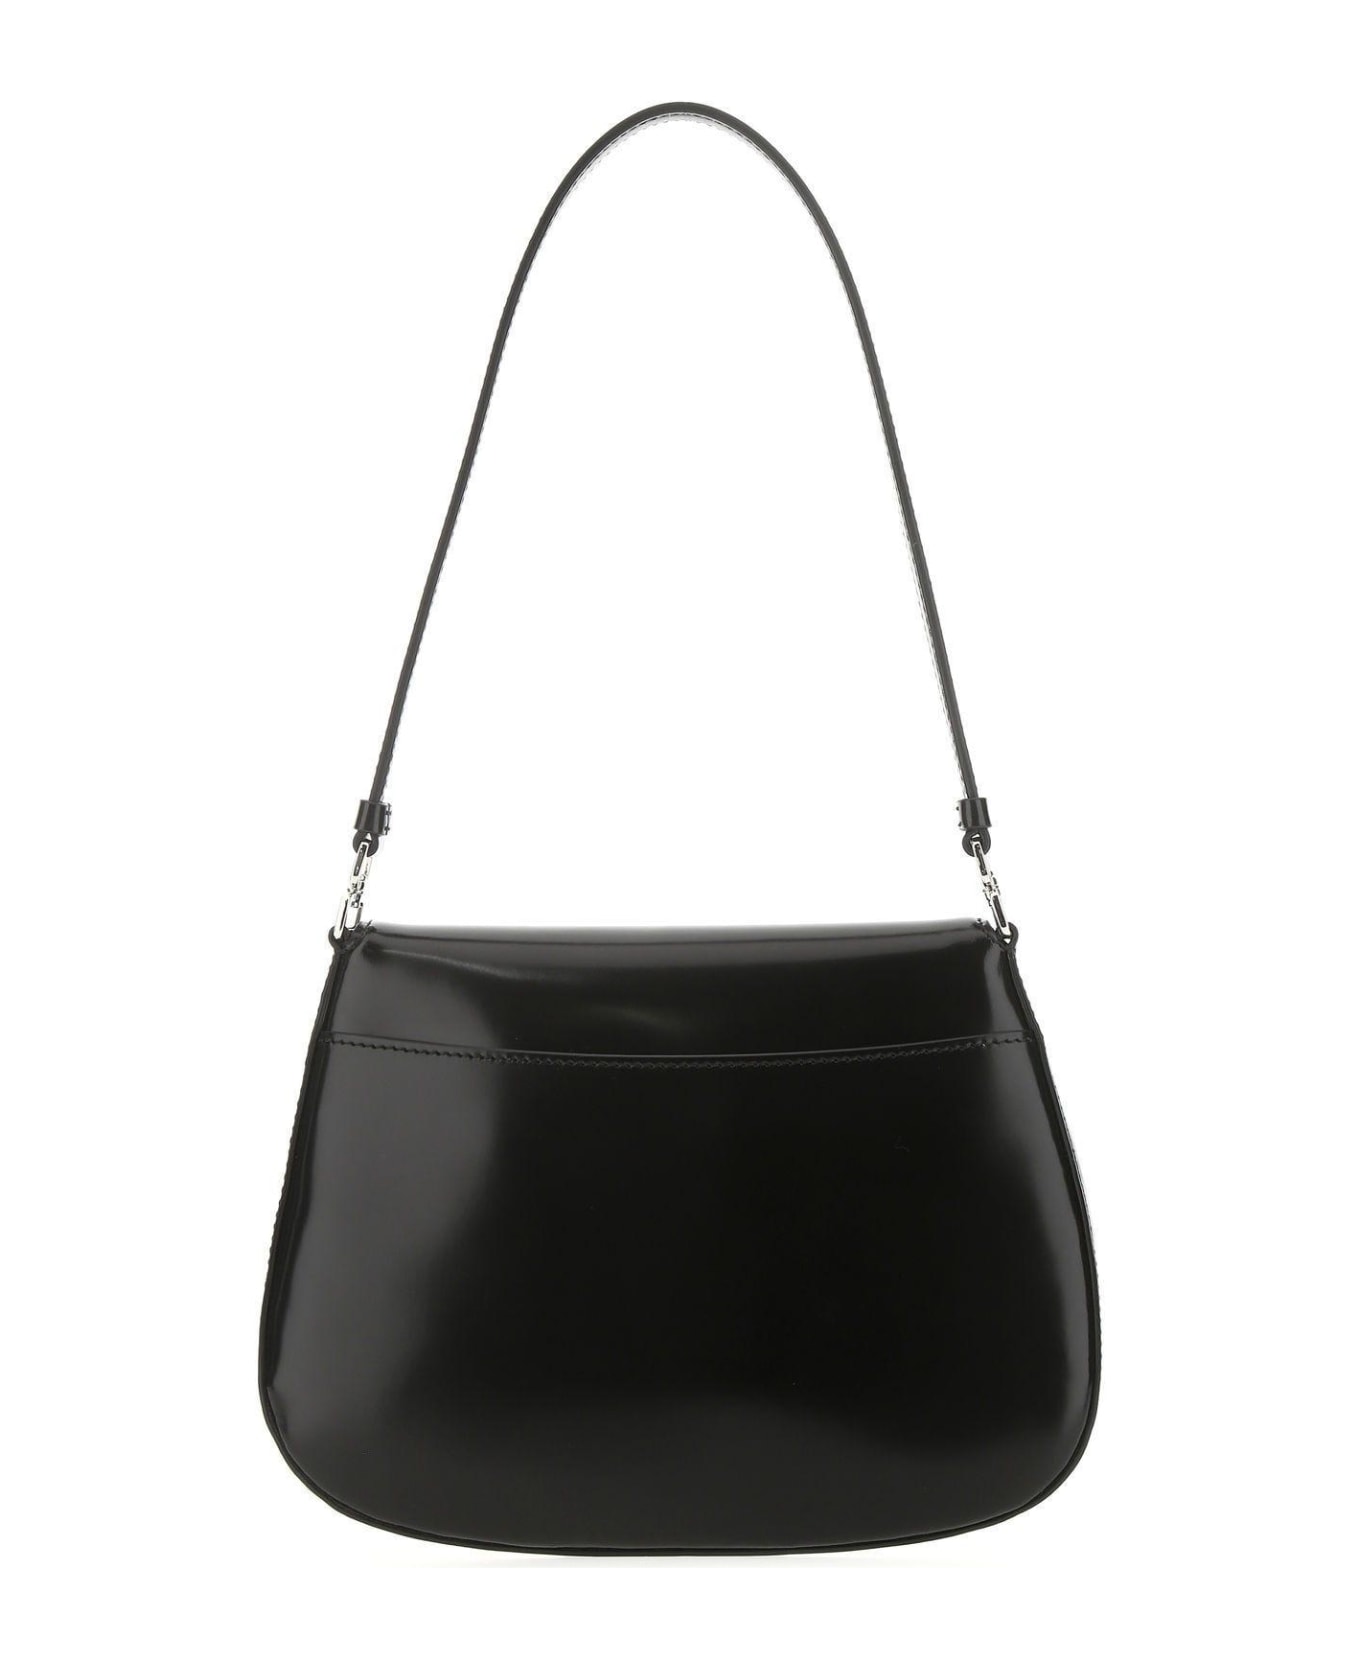 Prada Black Leather Cleo Shoulder Bag - NERO